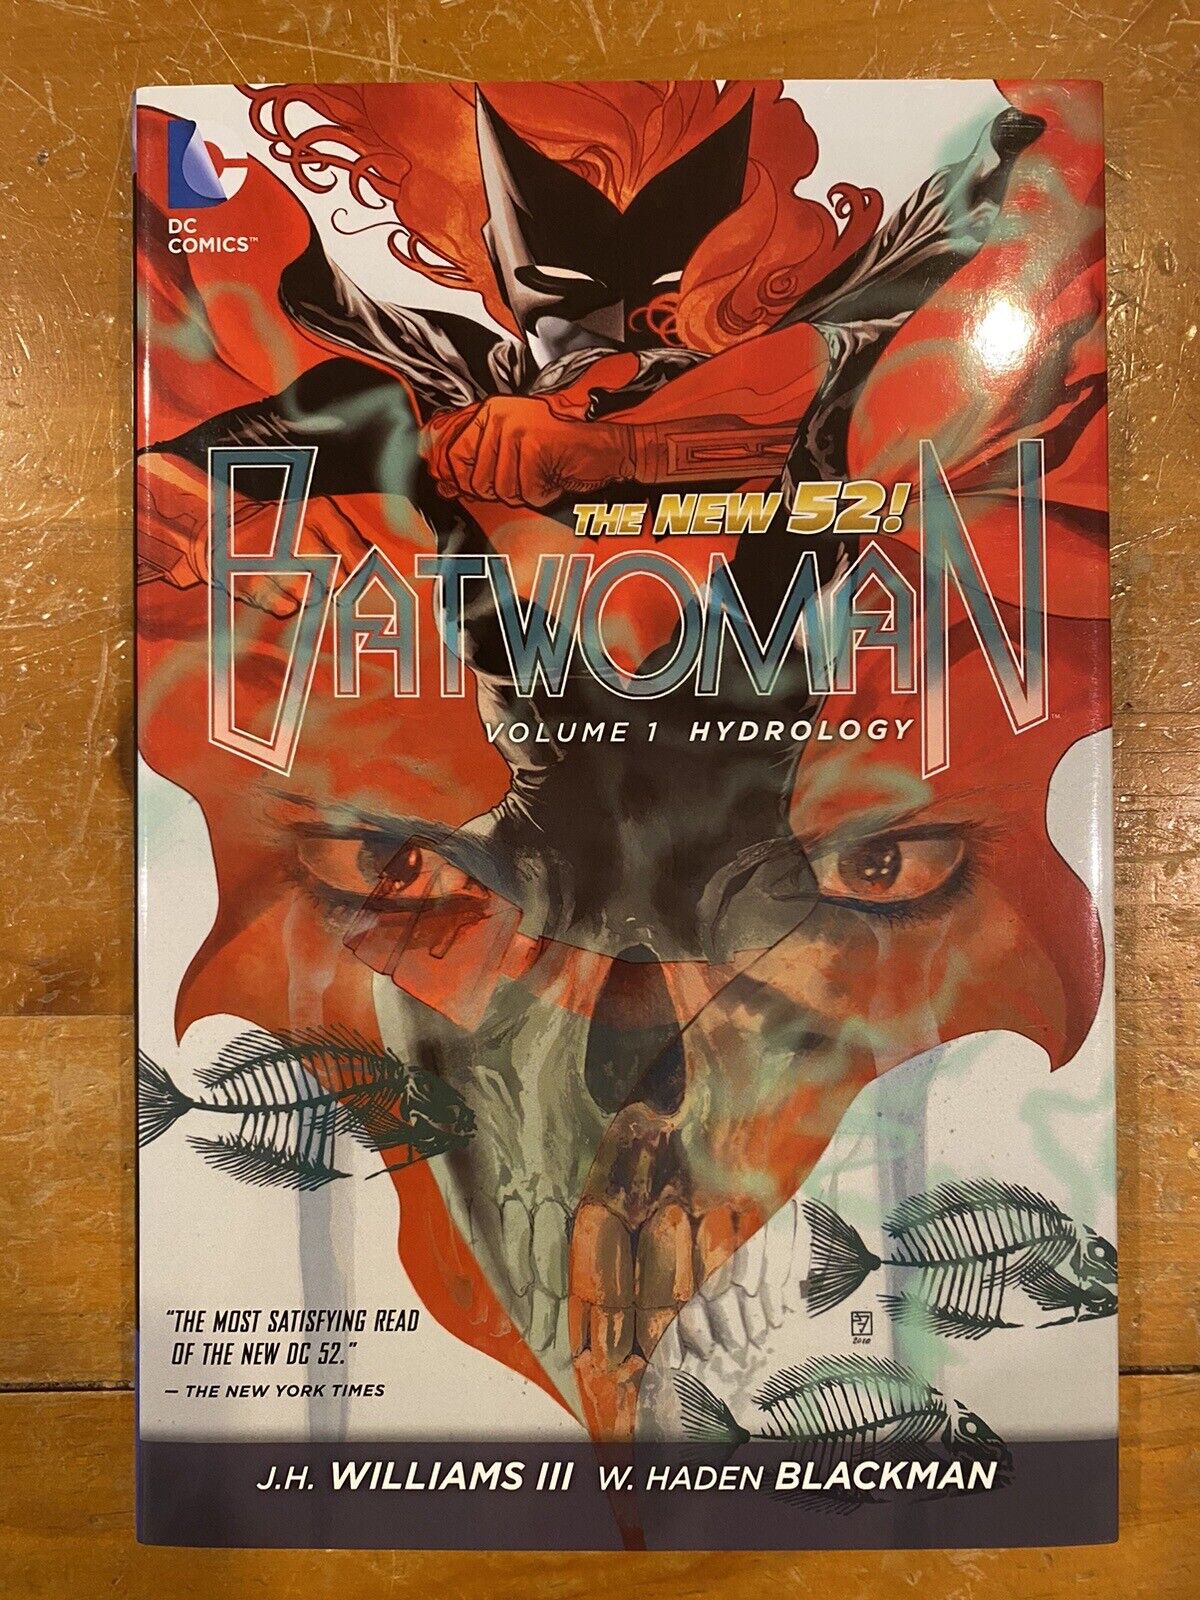 Batwoman Volume 1 HC (DC Comics, 2012) by J.H. Williams III